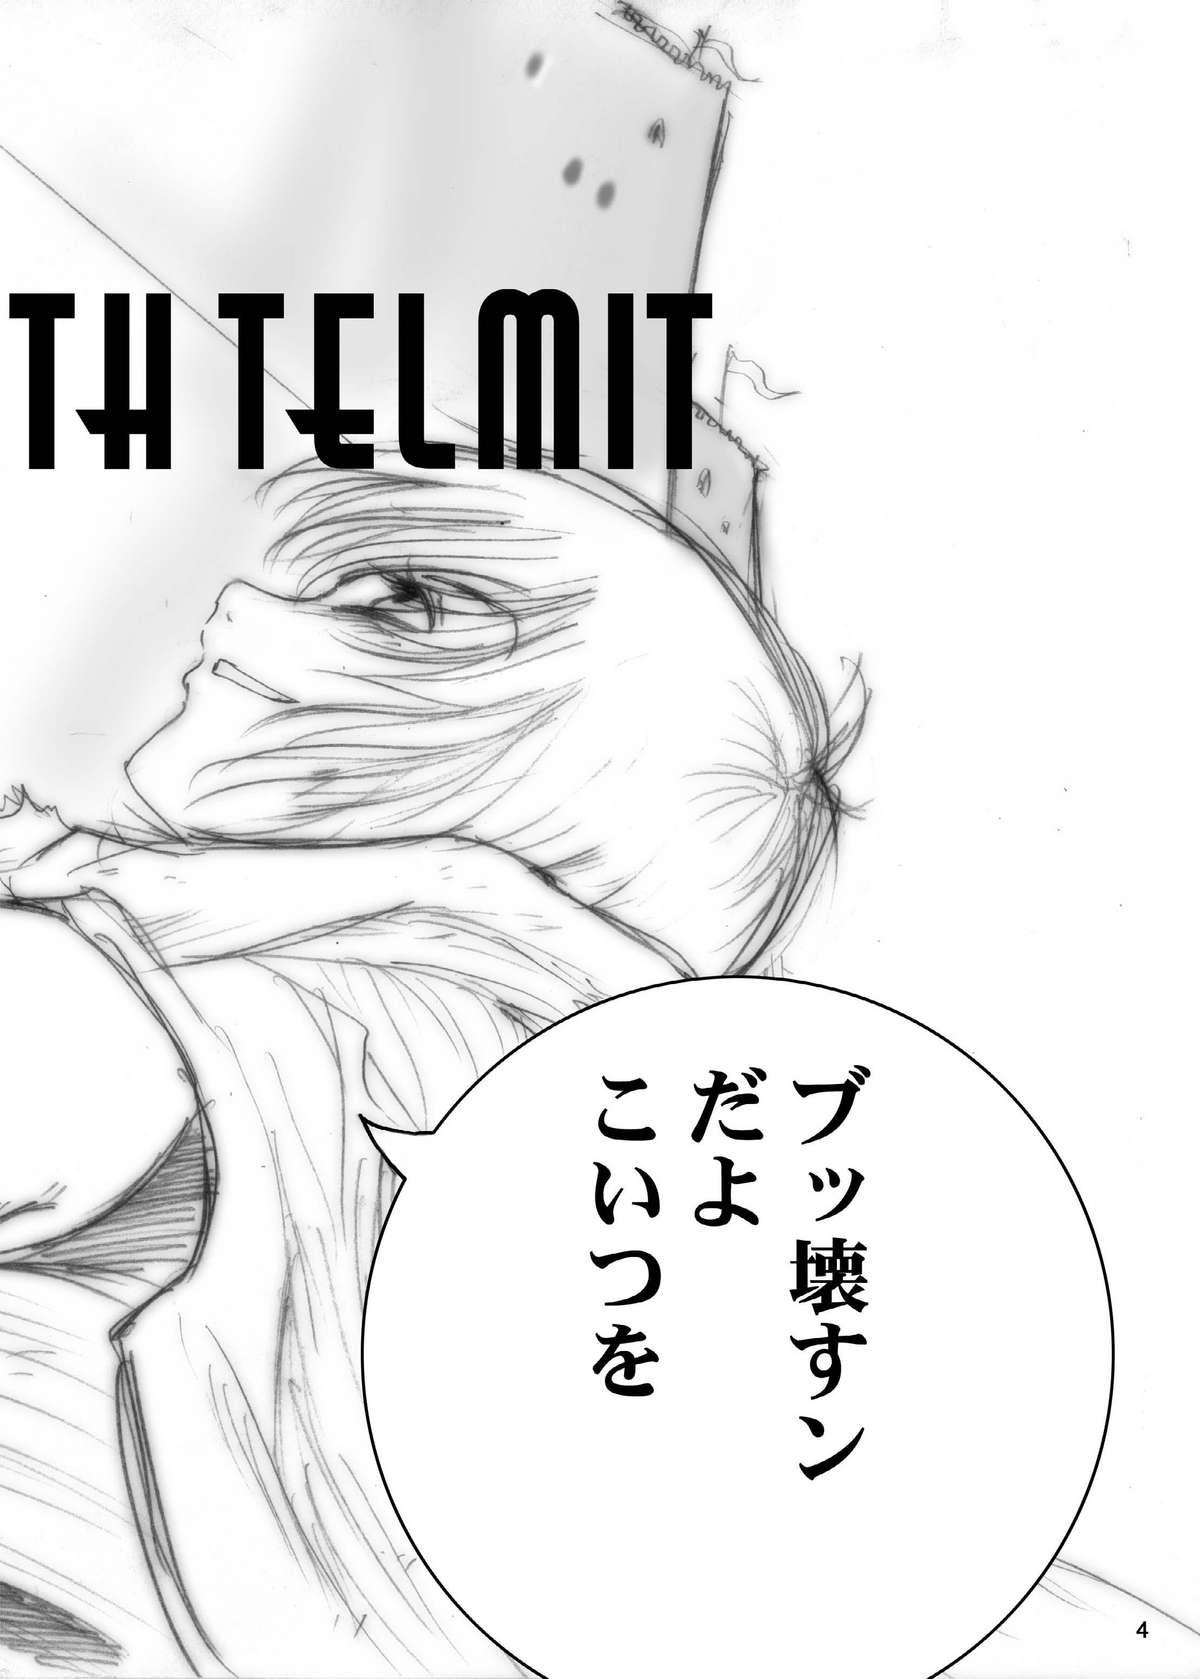 Interview with Telmit 3